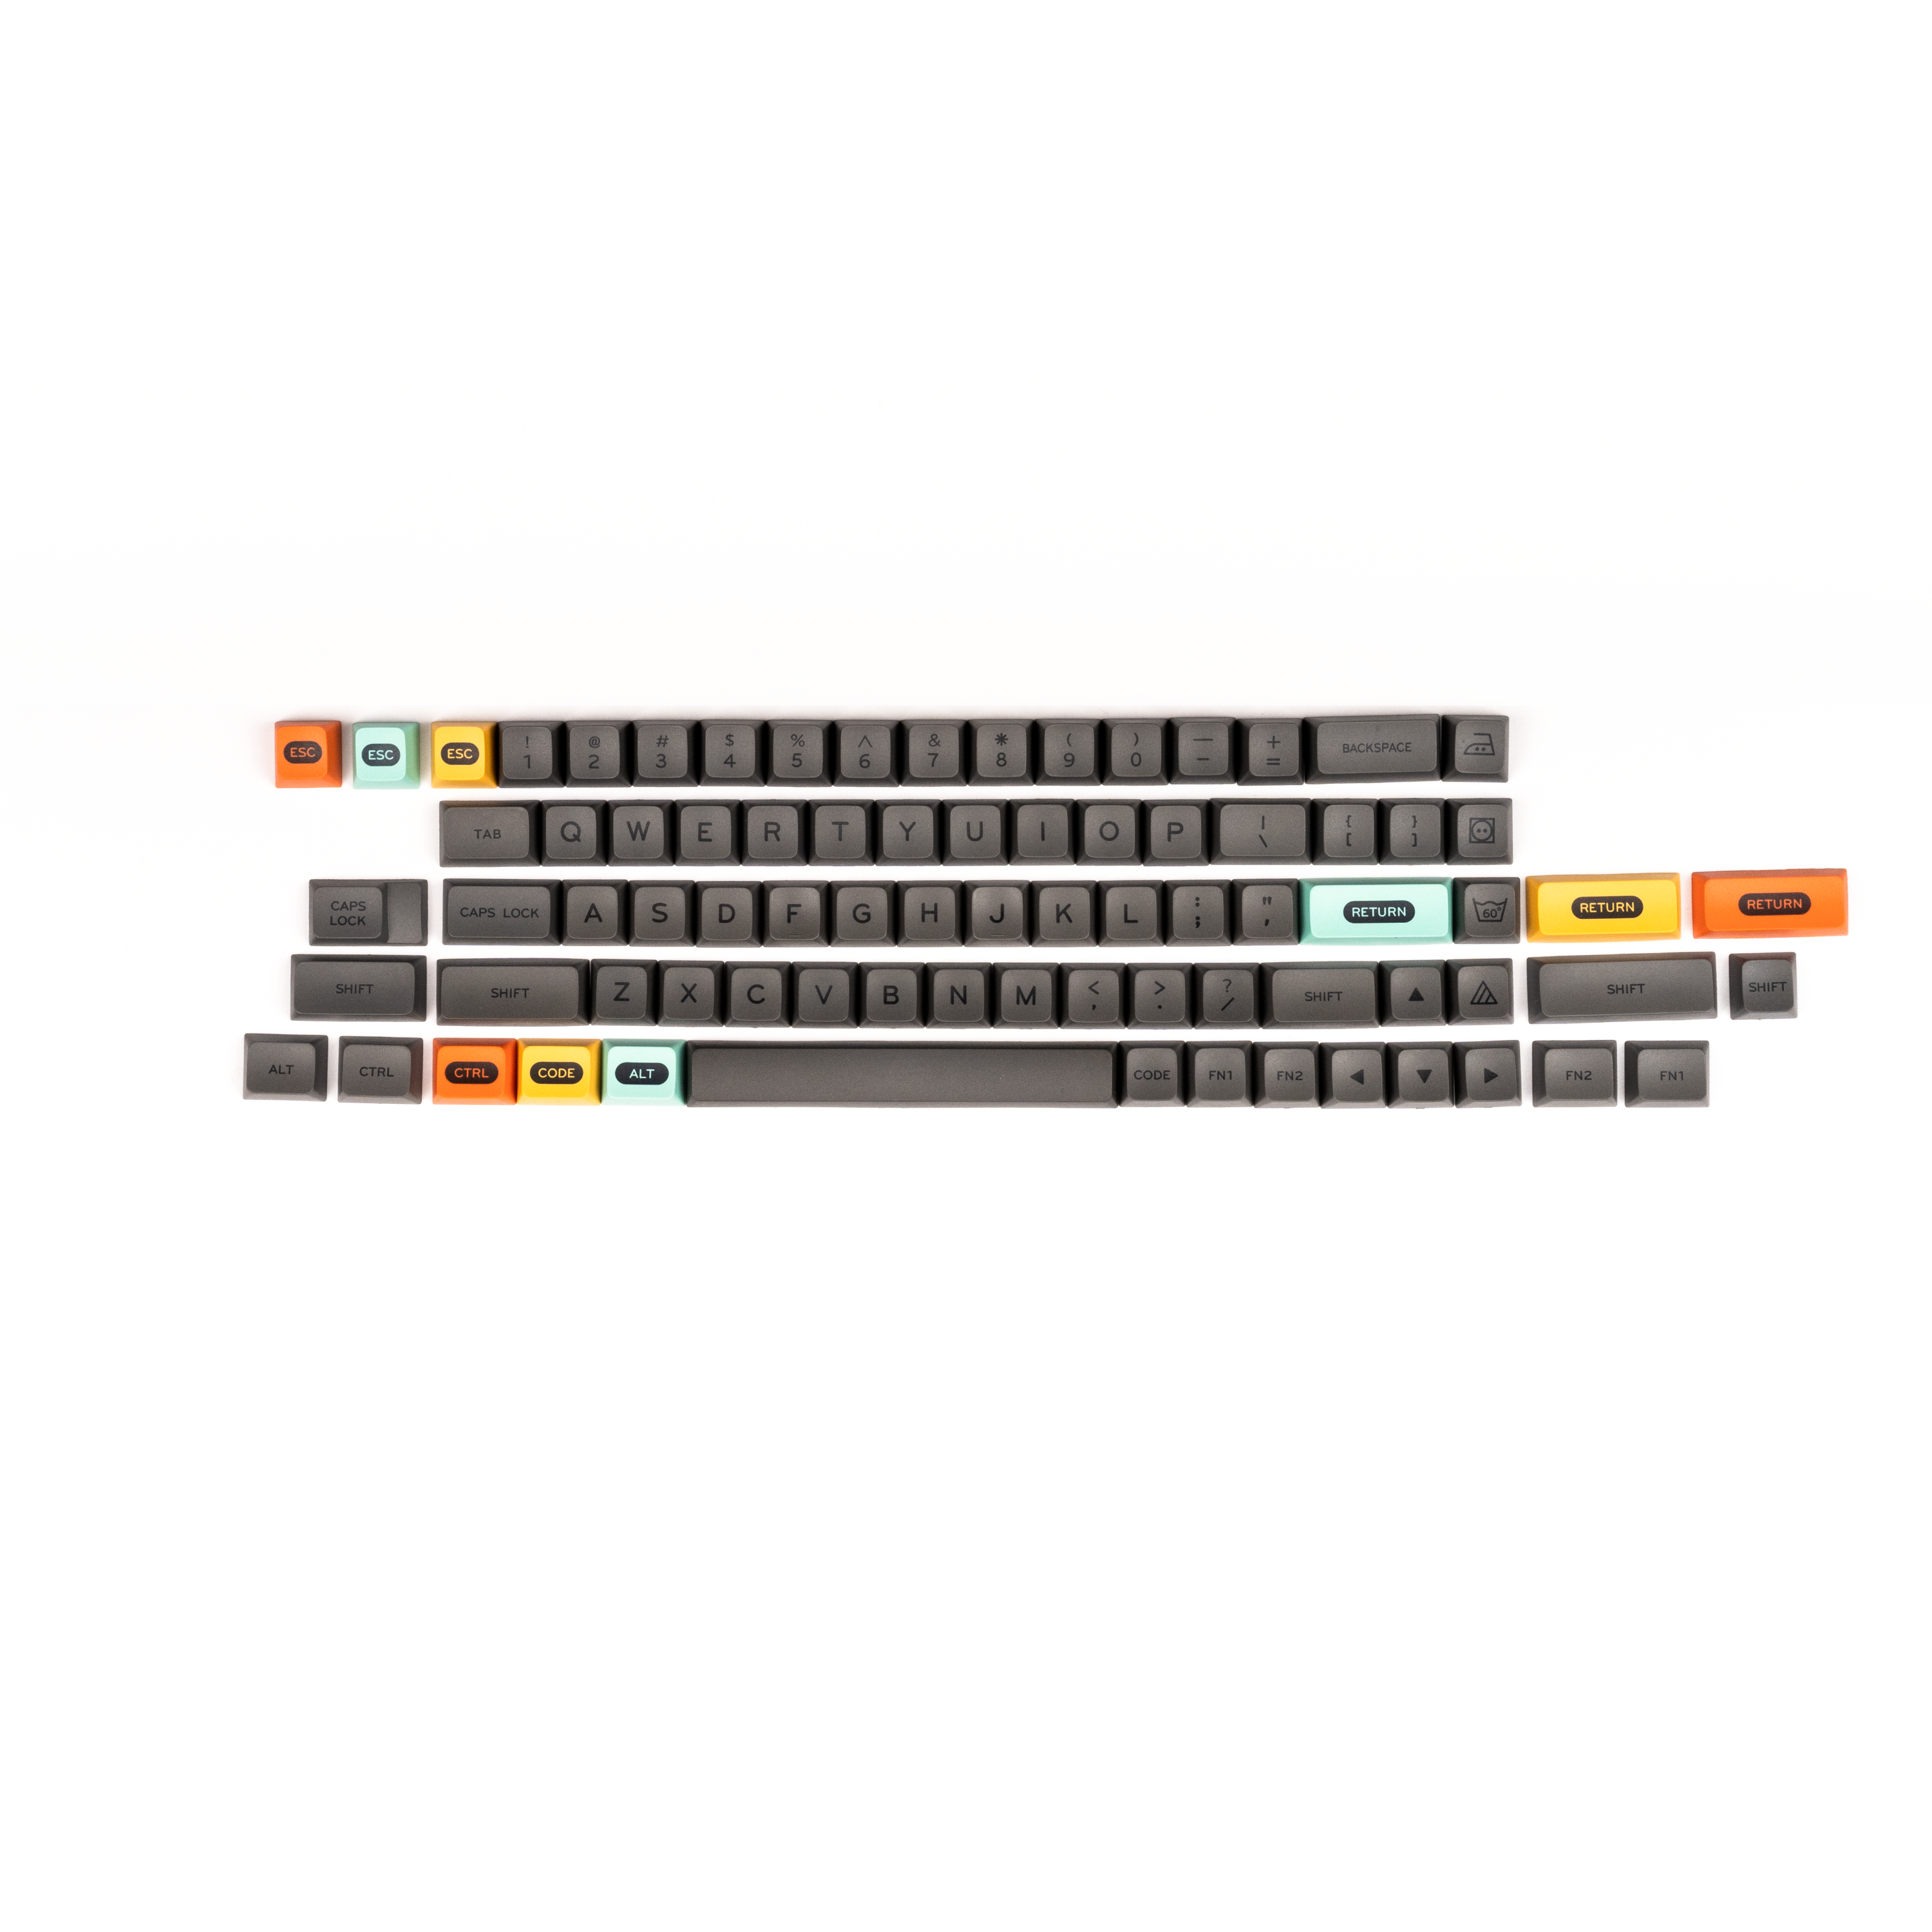 MelGeek MDA Label Tastenkappen-Set für mechanische Tastaturen